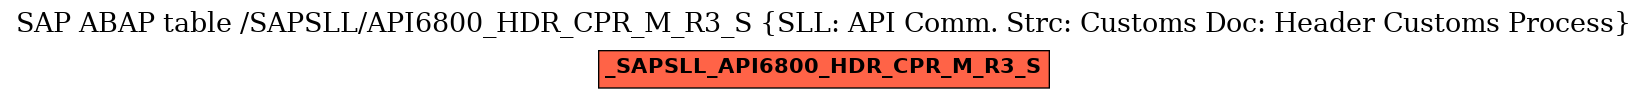 E-R Diagram for table /SAPSLL/API6800_HDR_CPR_M_R3_S (SLL: API Comm. Strc: Customs Doc: Header Customs Process)